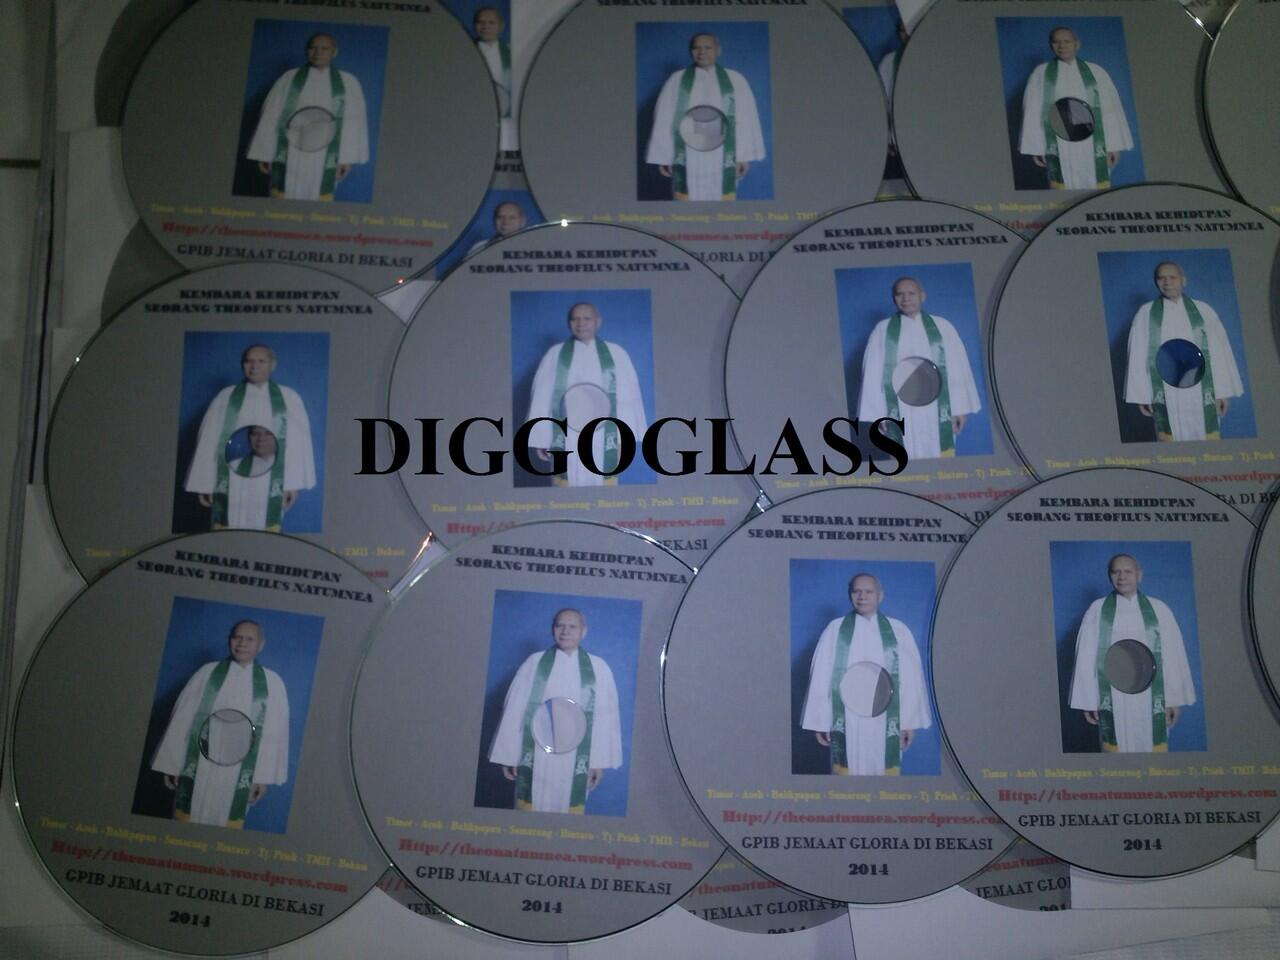 JASA (MURAH-MERIAH) Cetak CD/DVD, Burning, Label Stiker/Label Direct On CD/DVD